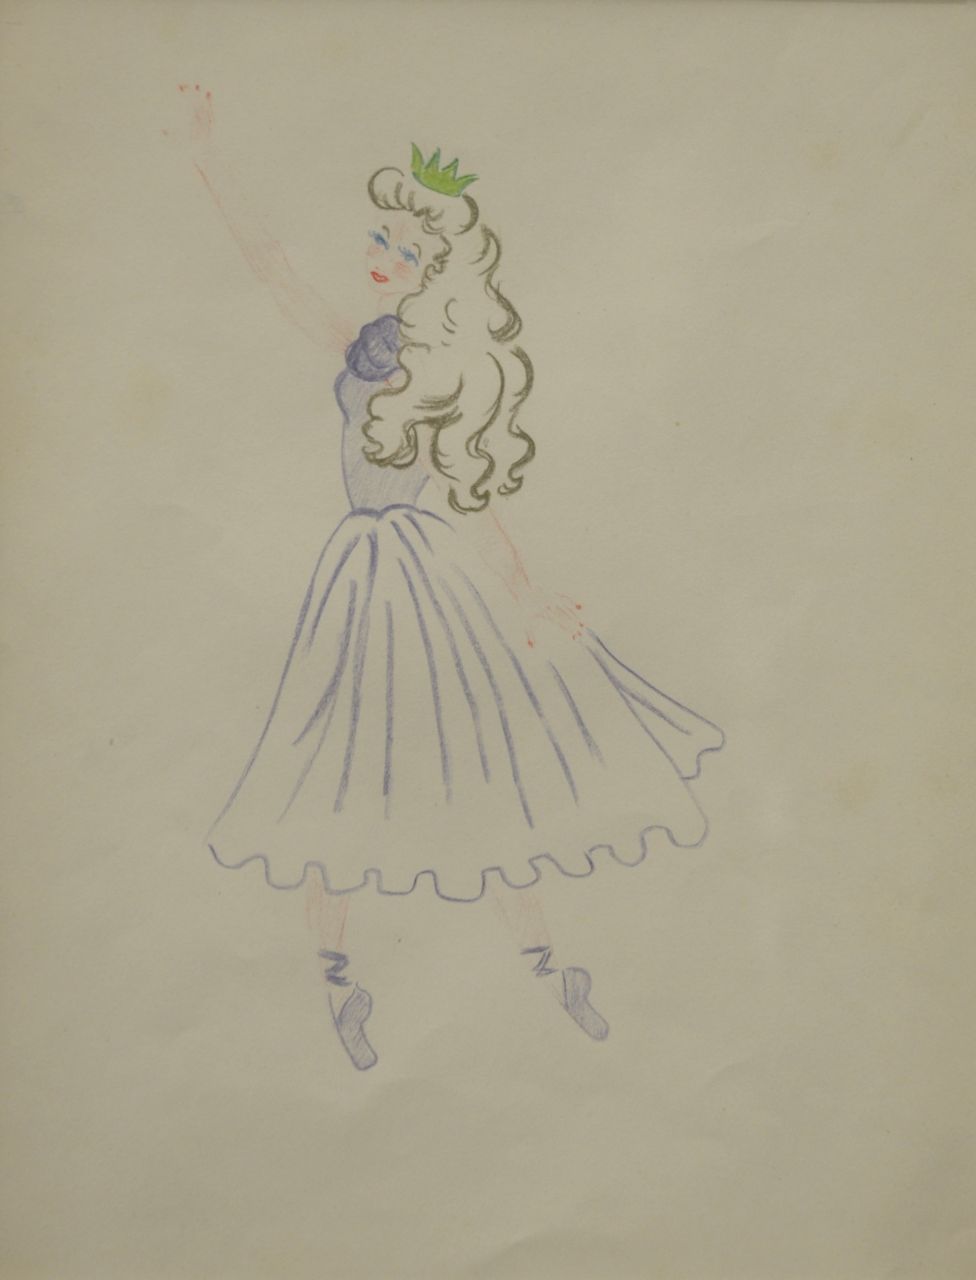 Oranje-Nassau (Prinses Beatrix) B.W.A. van | Beatrix Wilhelmina Armgard van Oranje-Nassau (Prinses Beatrix), Balletprinses, kleurpotlood op papier 30,0 x 23,0 cm